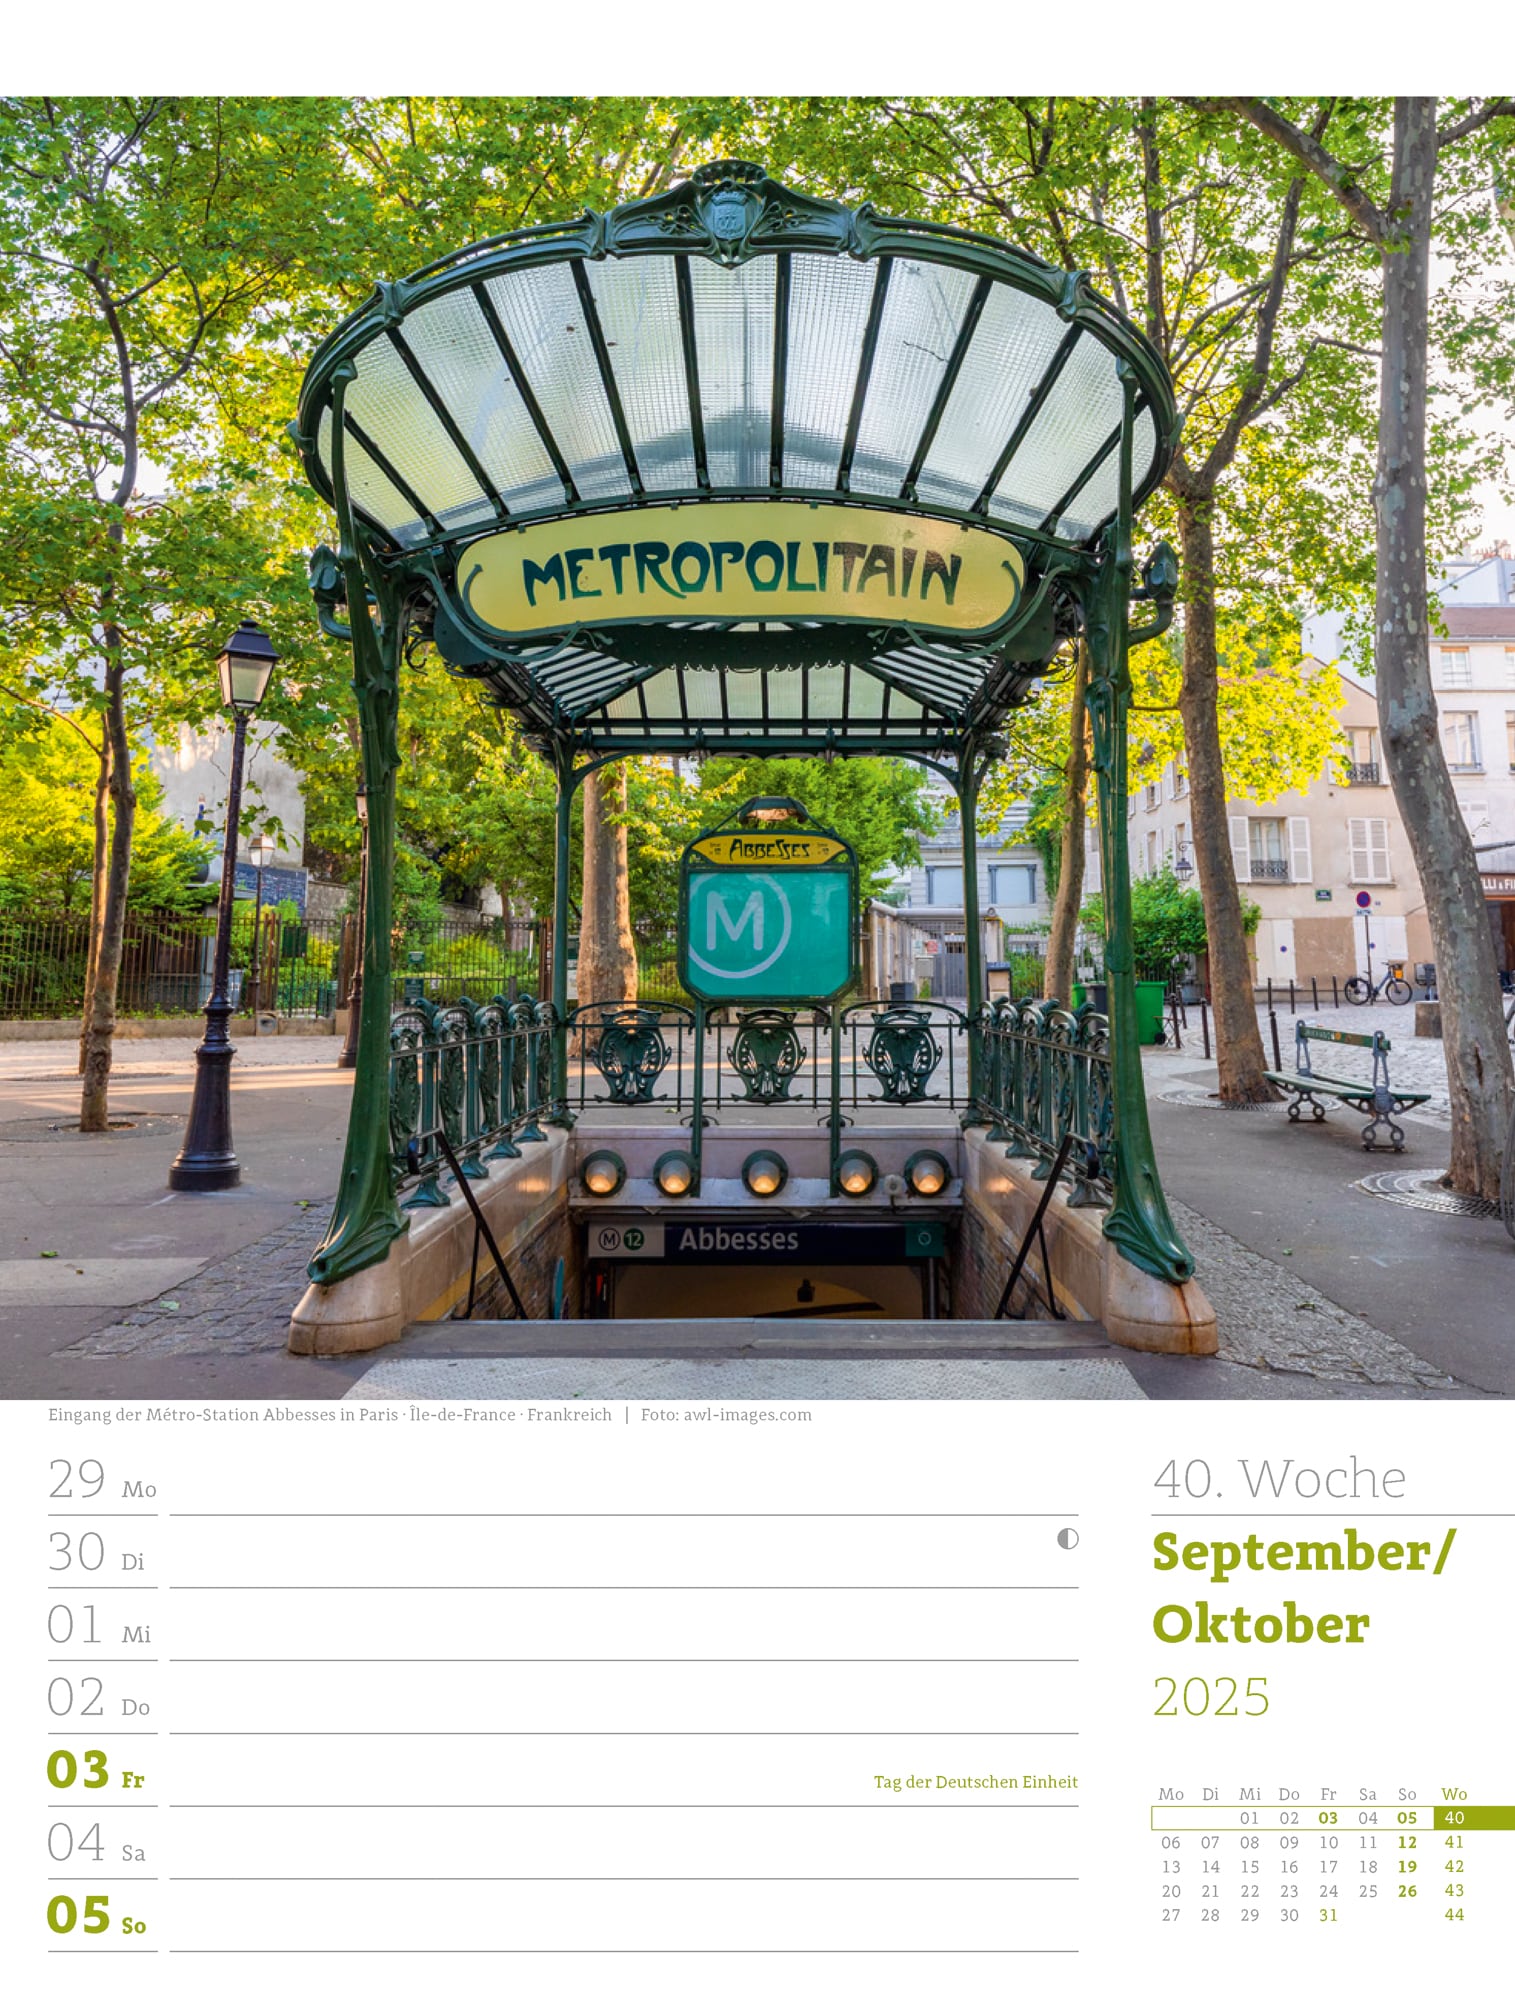 Ackermann Calendar Travel the World 2025 - Weekly Planner - Inside View 43